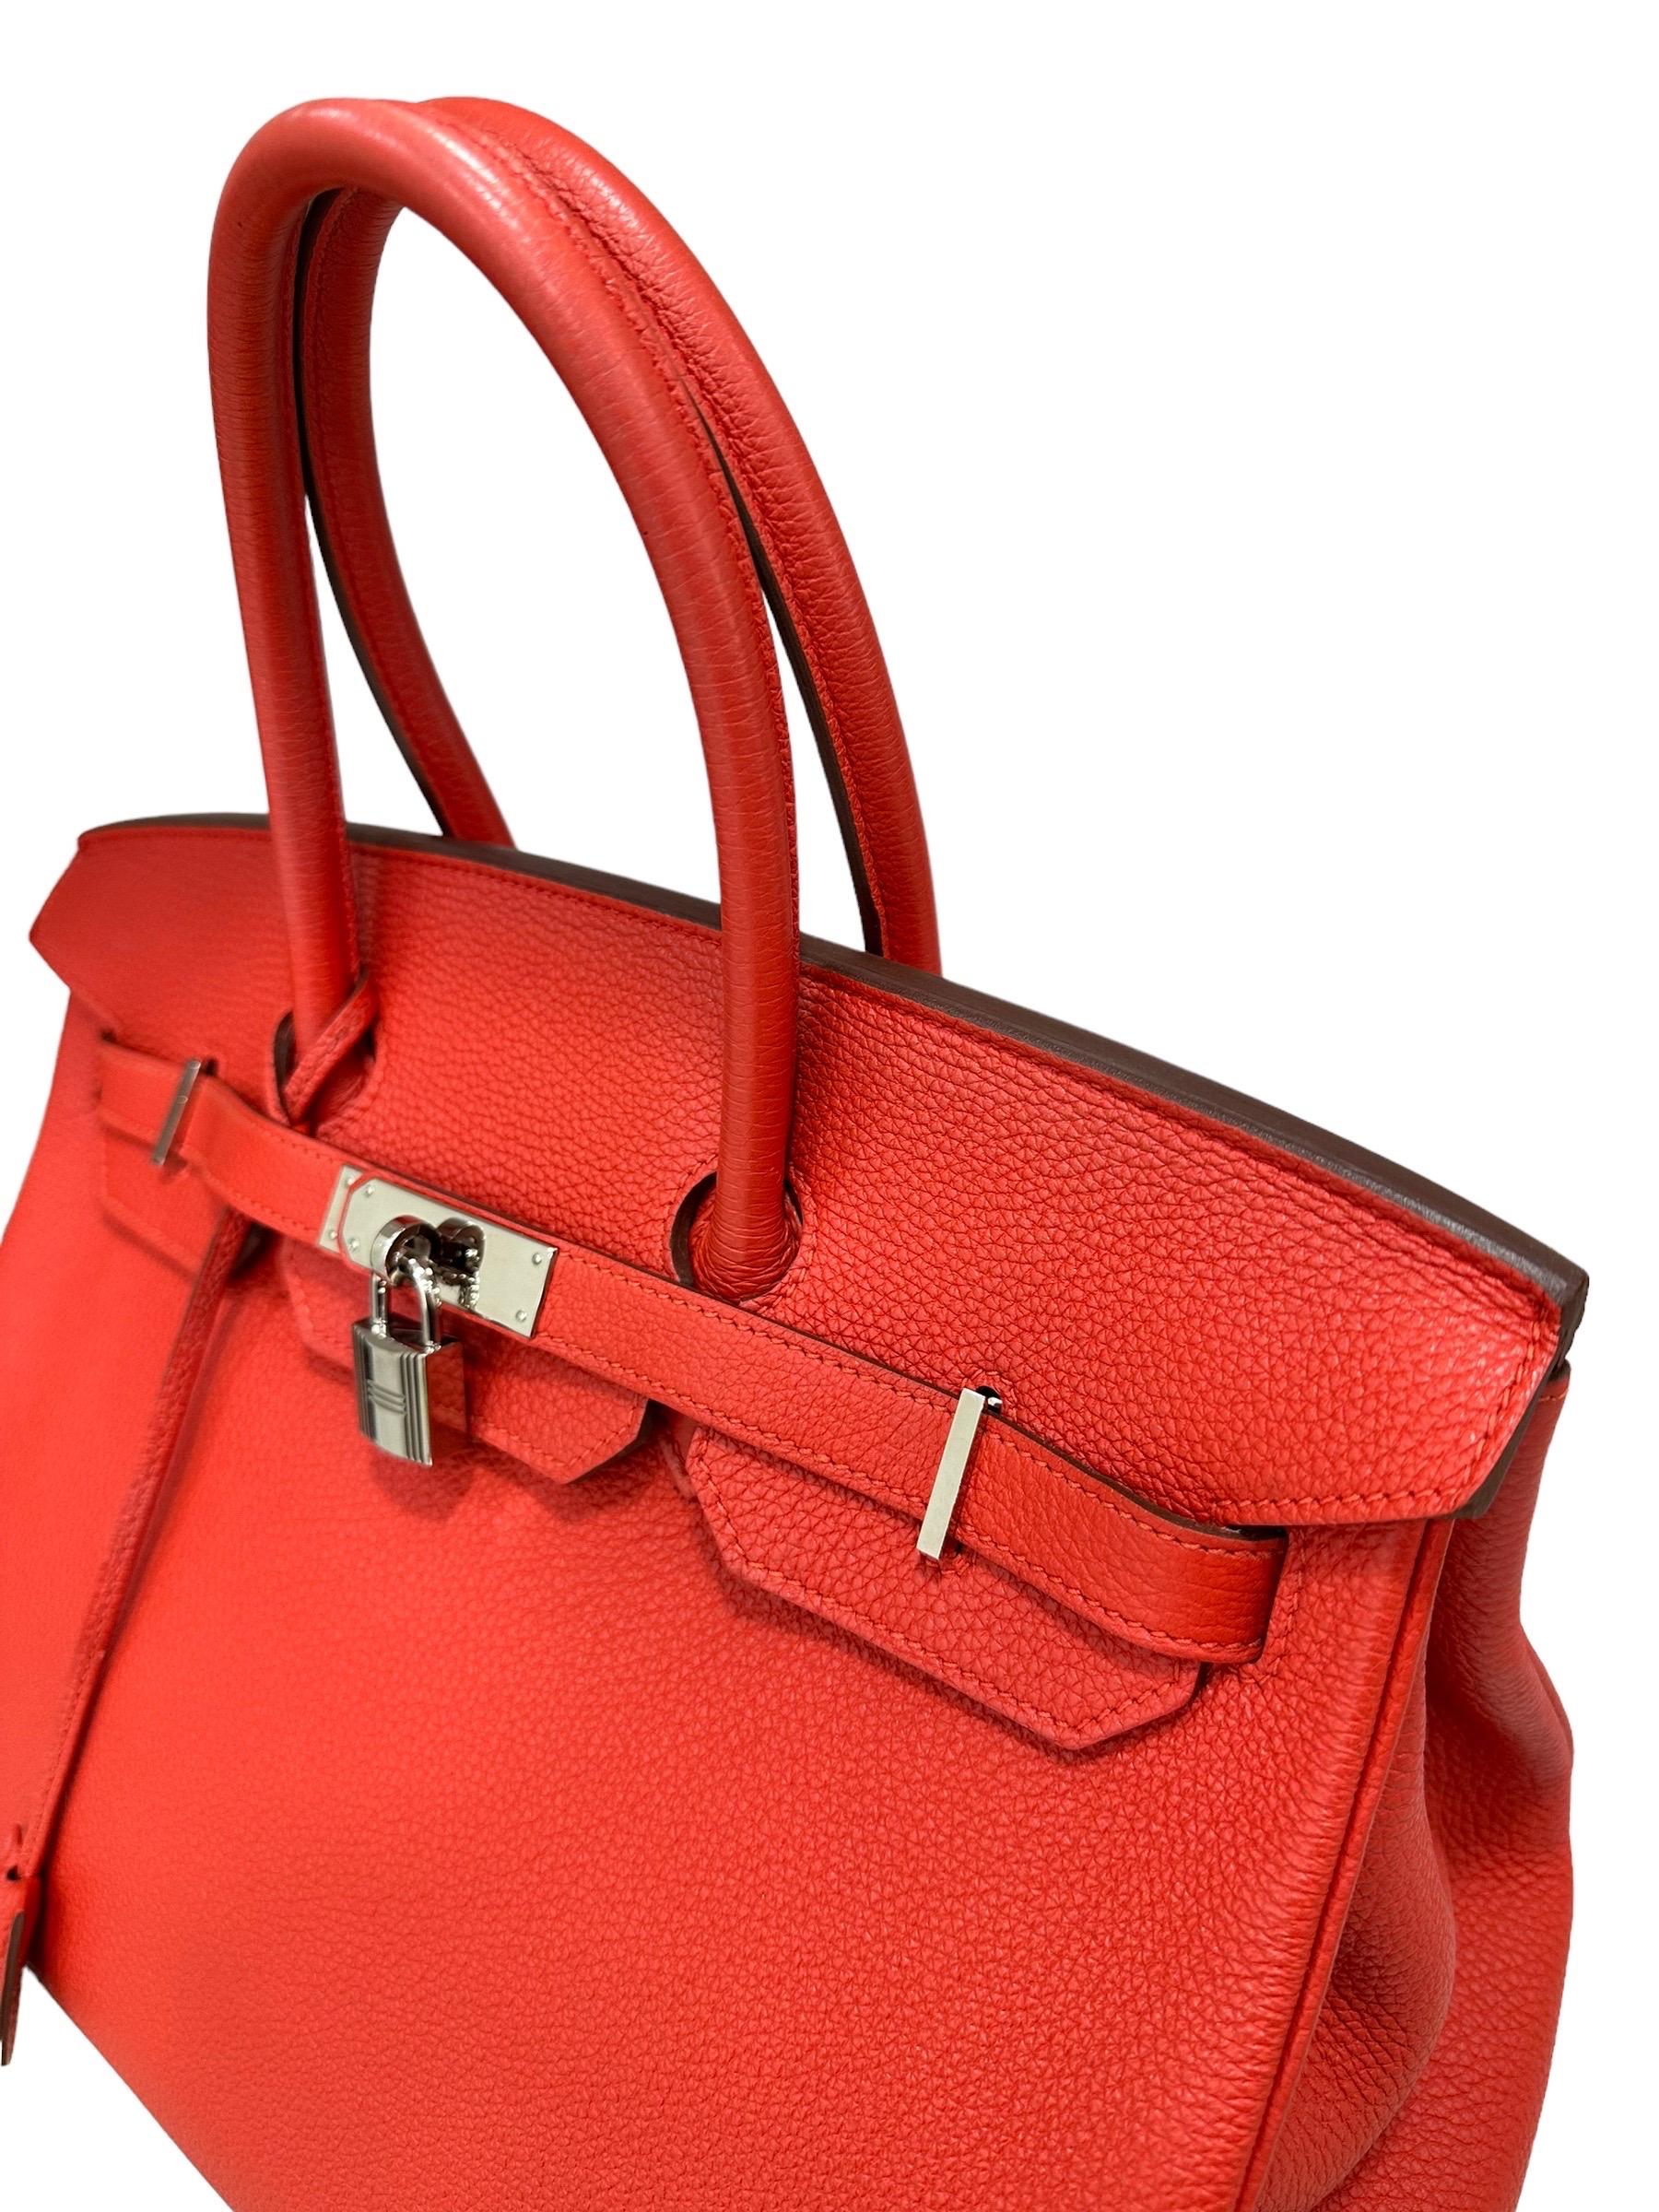 2011 Hermès Birkin 35 Togo Leather Rouge Capucine Top Handle Bag en vente 12